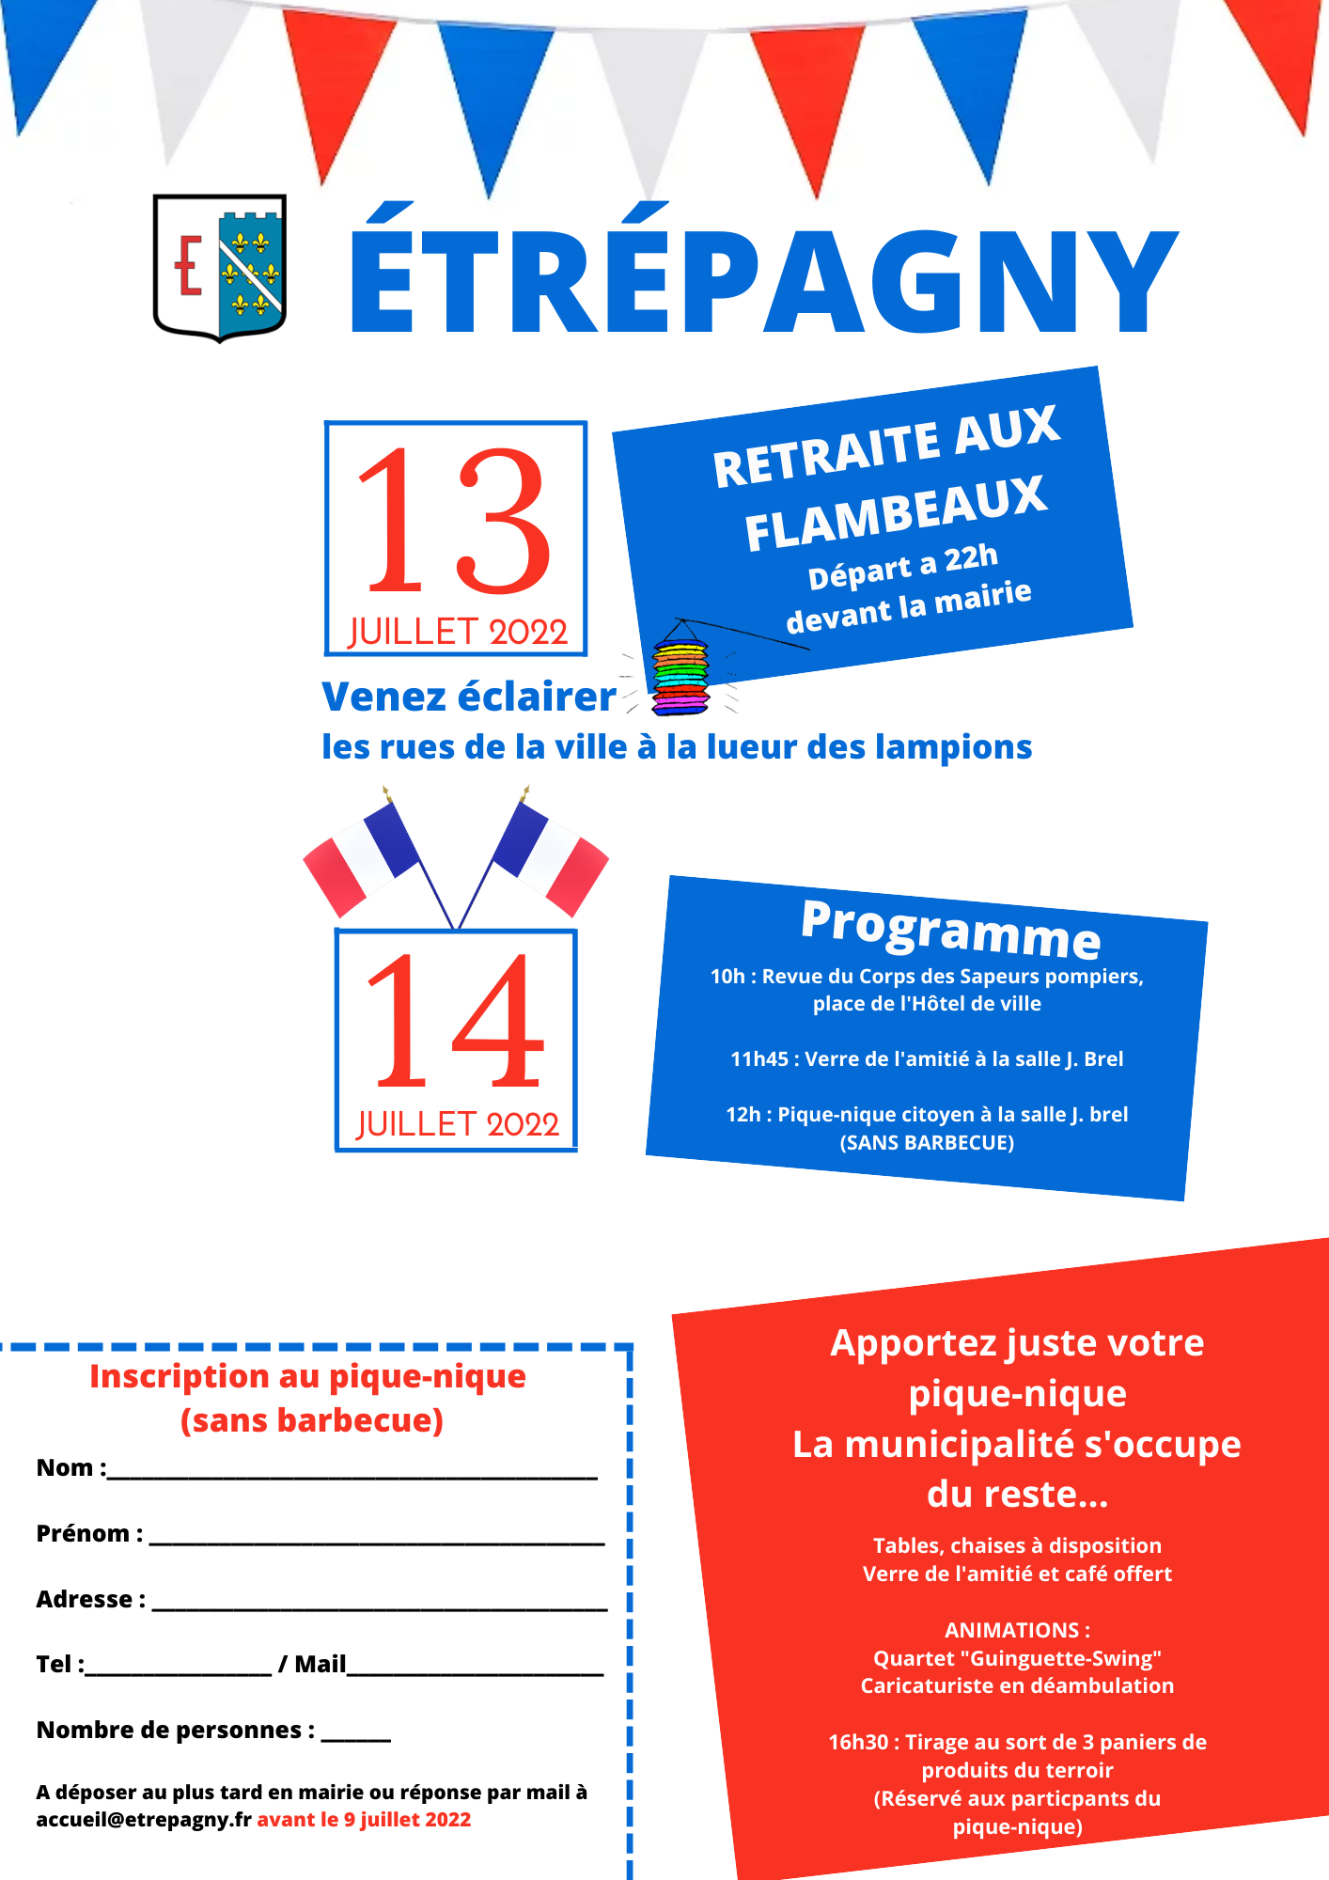 etrepagny-festivites-14-juillet-2022